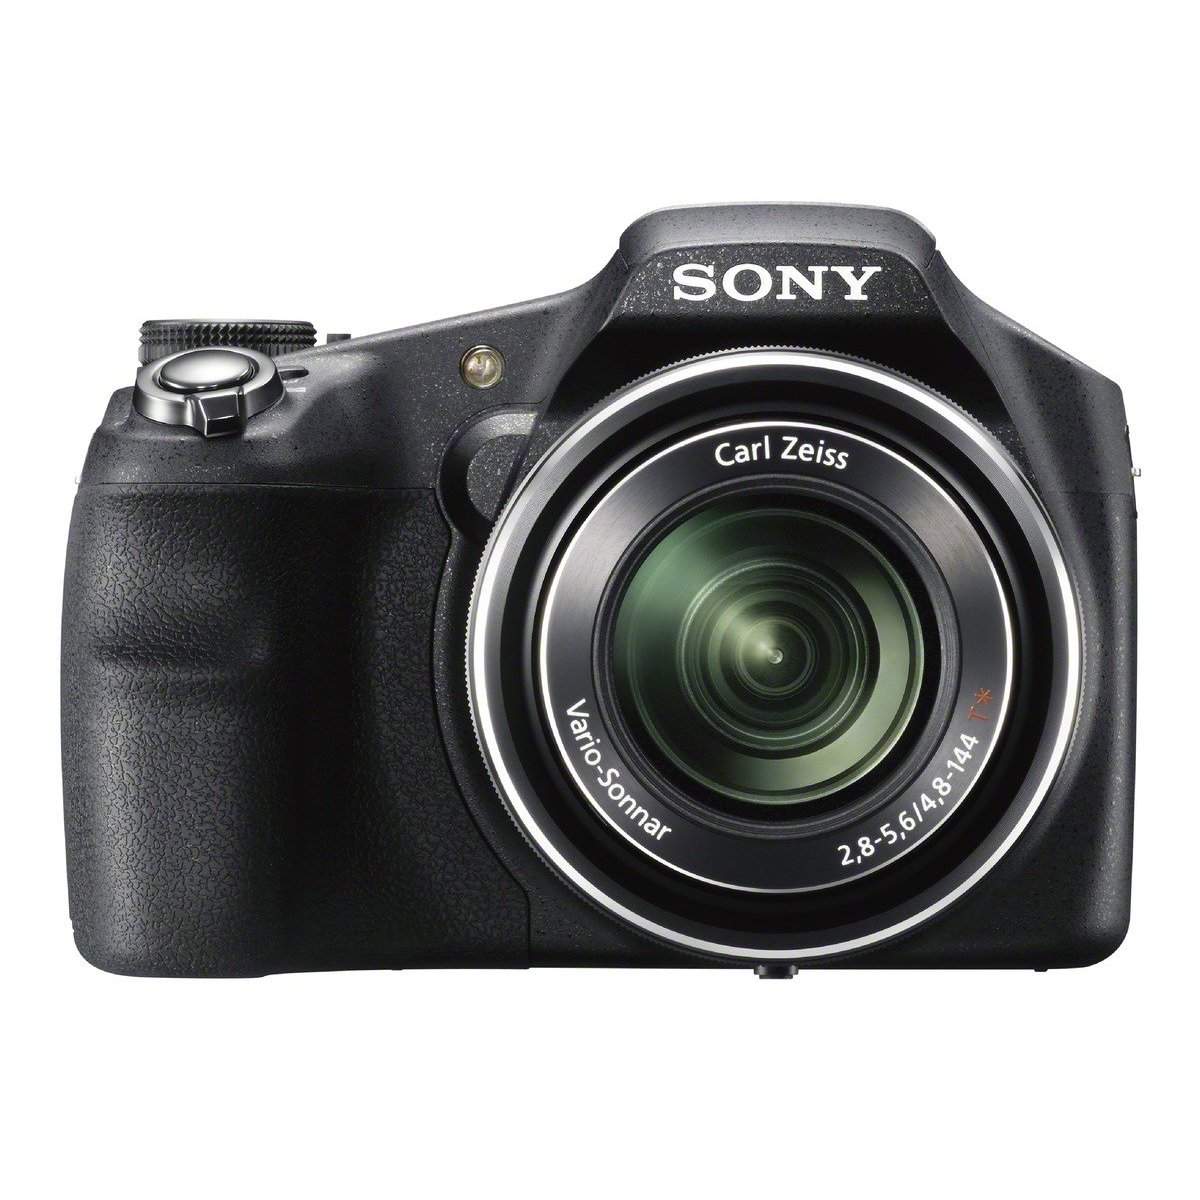 Sony+Cyber-shot+DSC-HX200V+18.2+MP+front+view.jpg